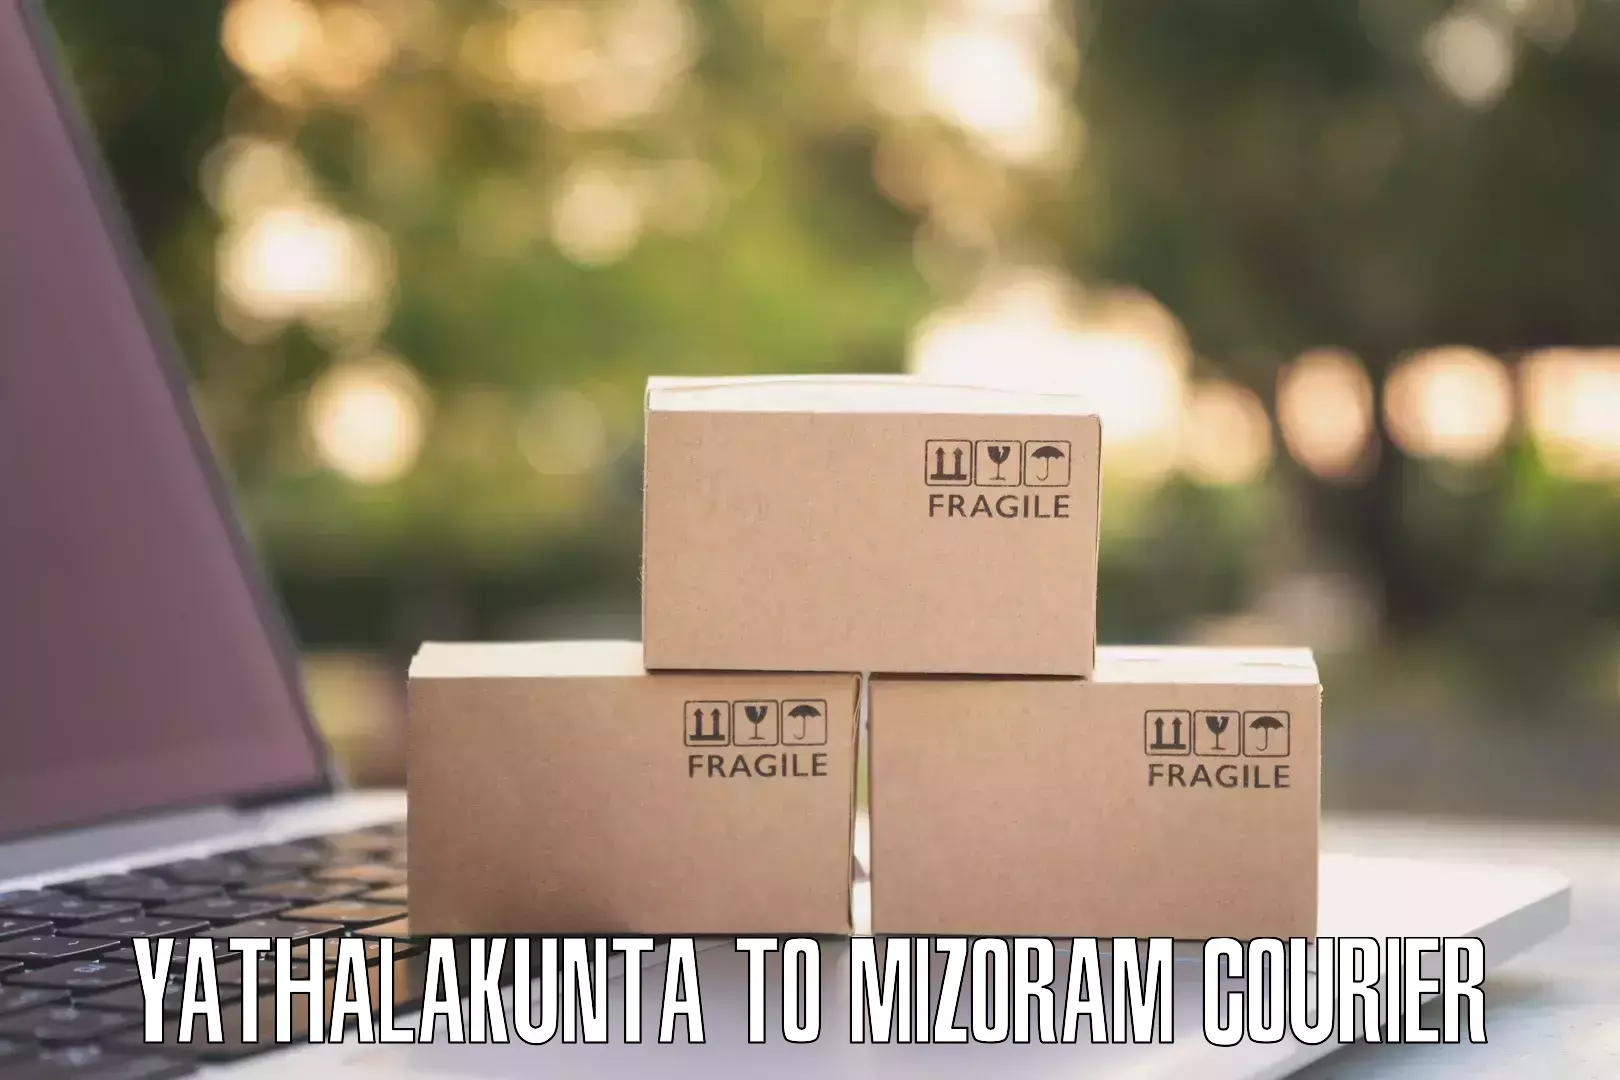 Quality courier partnerships Yathalakunta to Aizawl